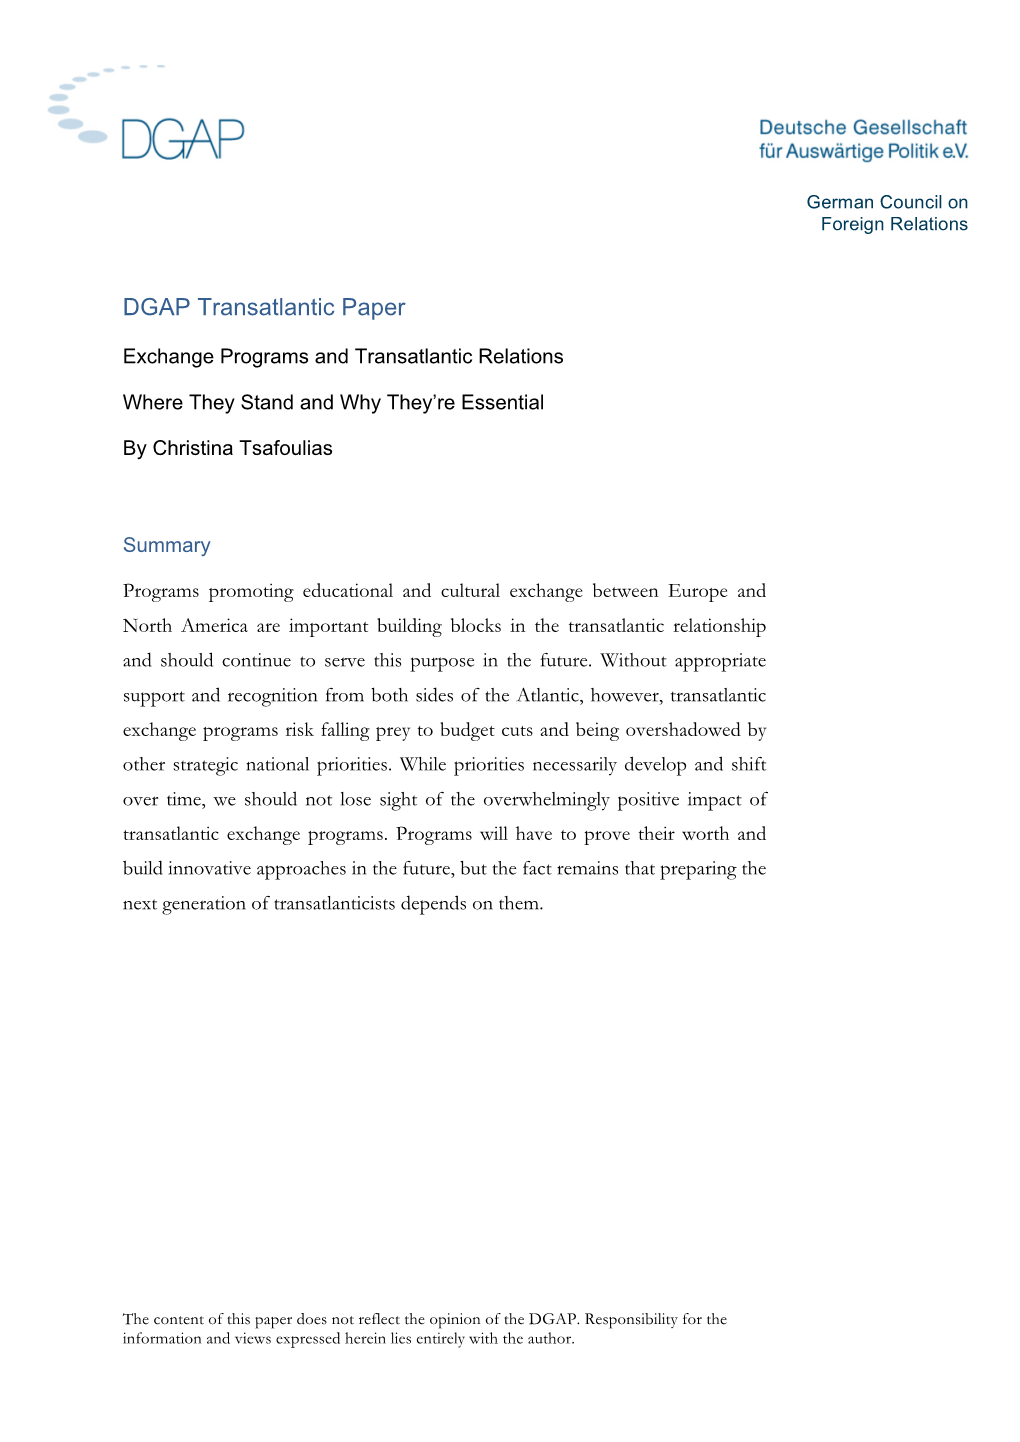 DGAP Transatlantic Paper